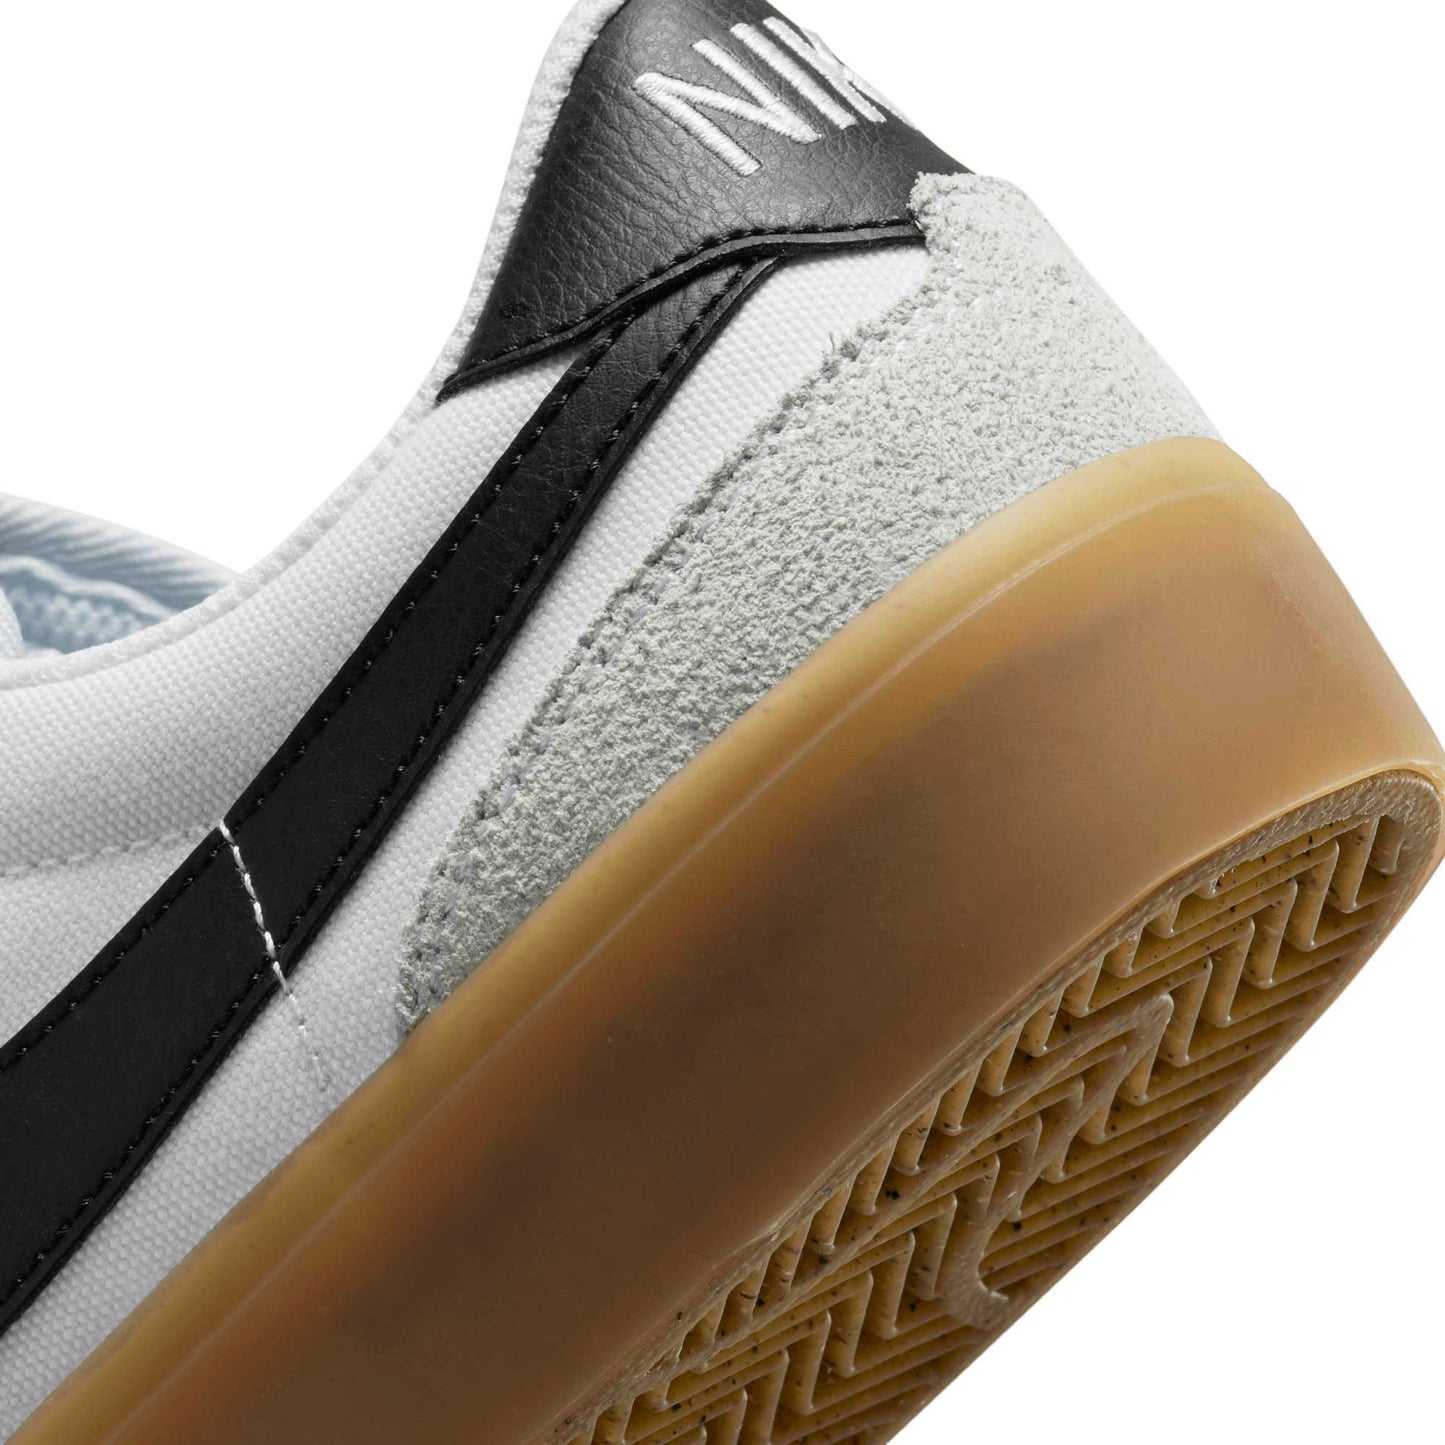 Nike SB Pogo, white/black-white-gum light brown - Tiki Room Skateboards - 5